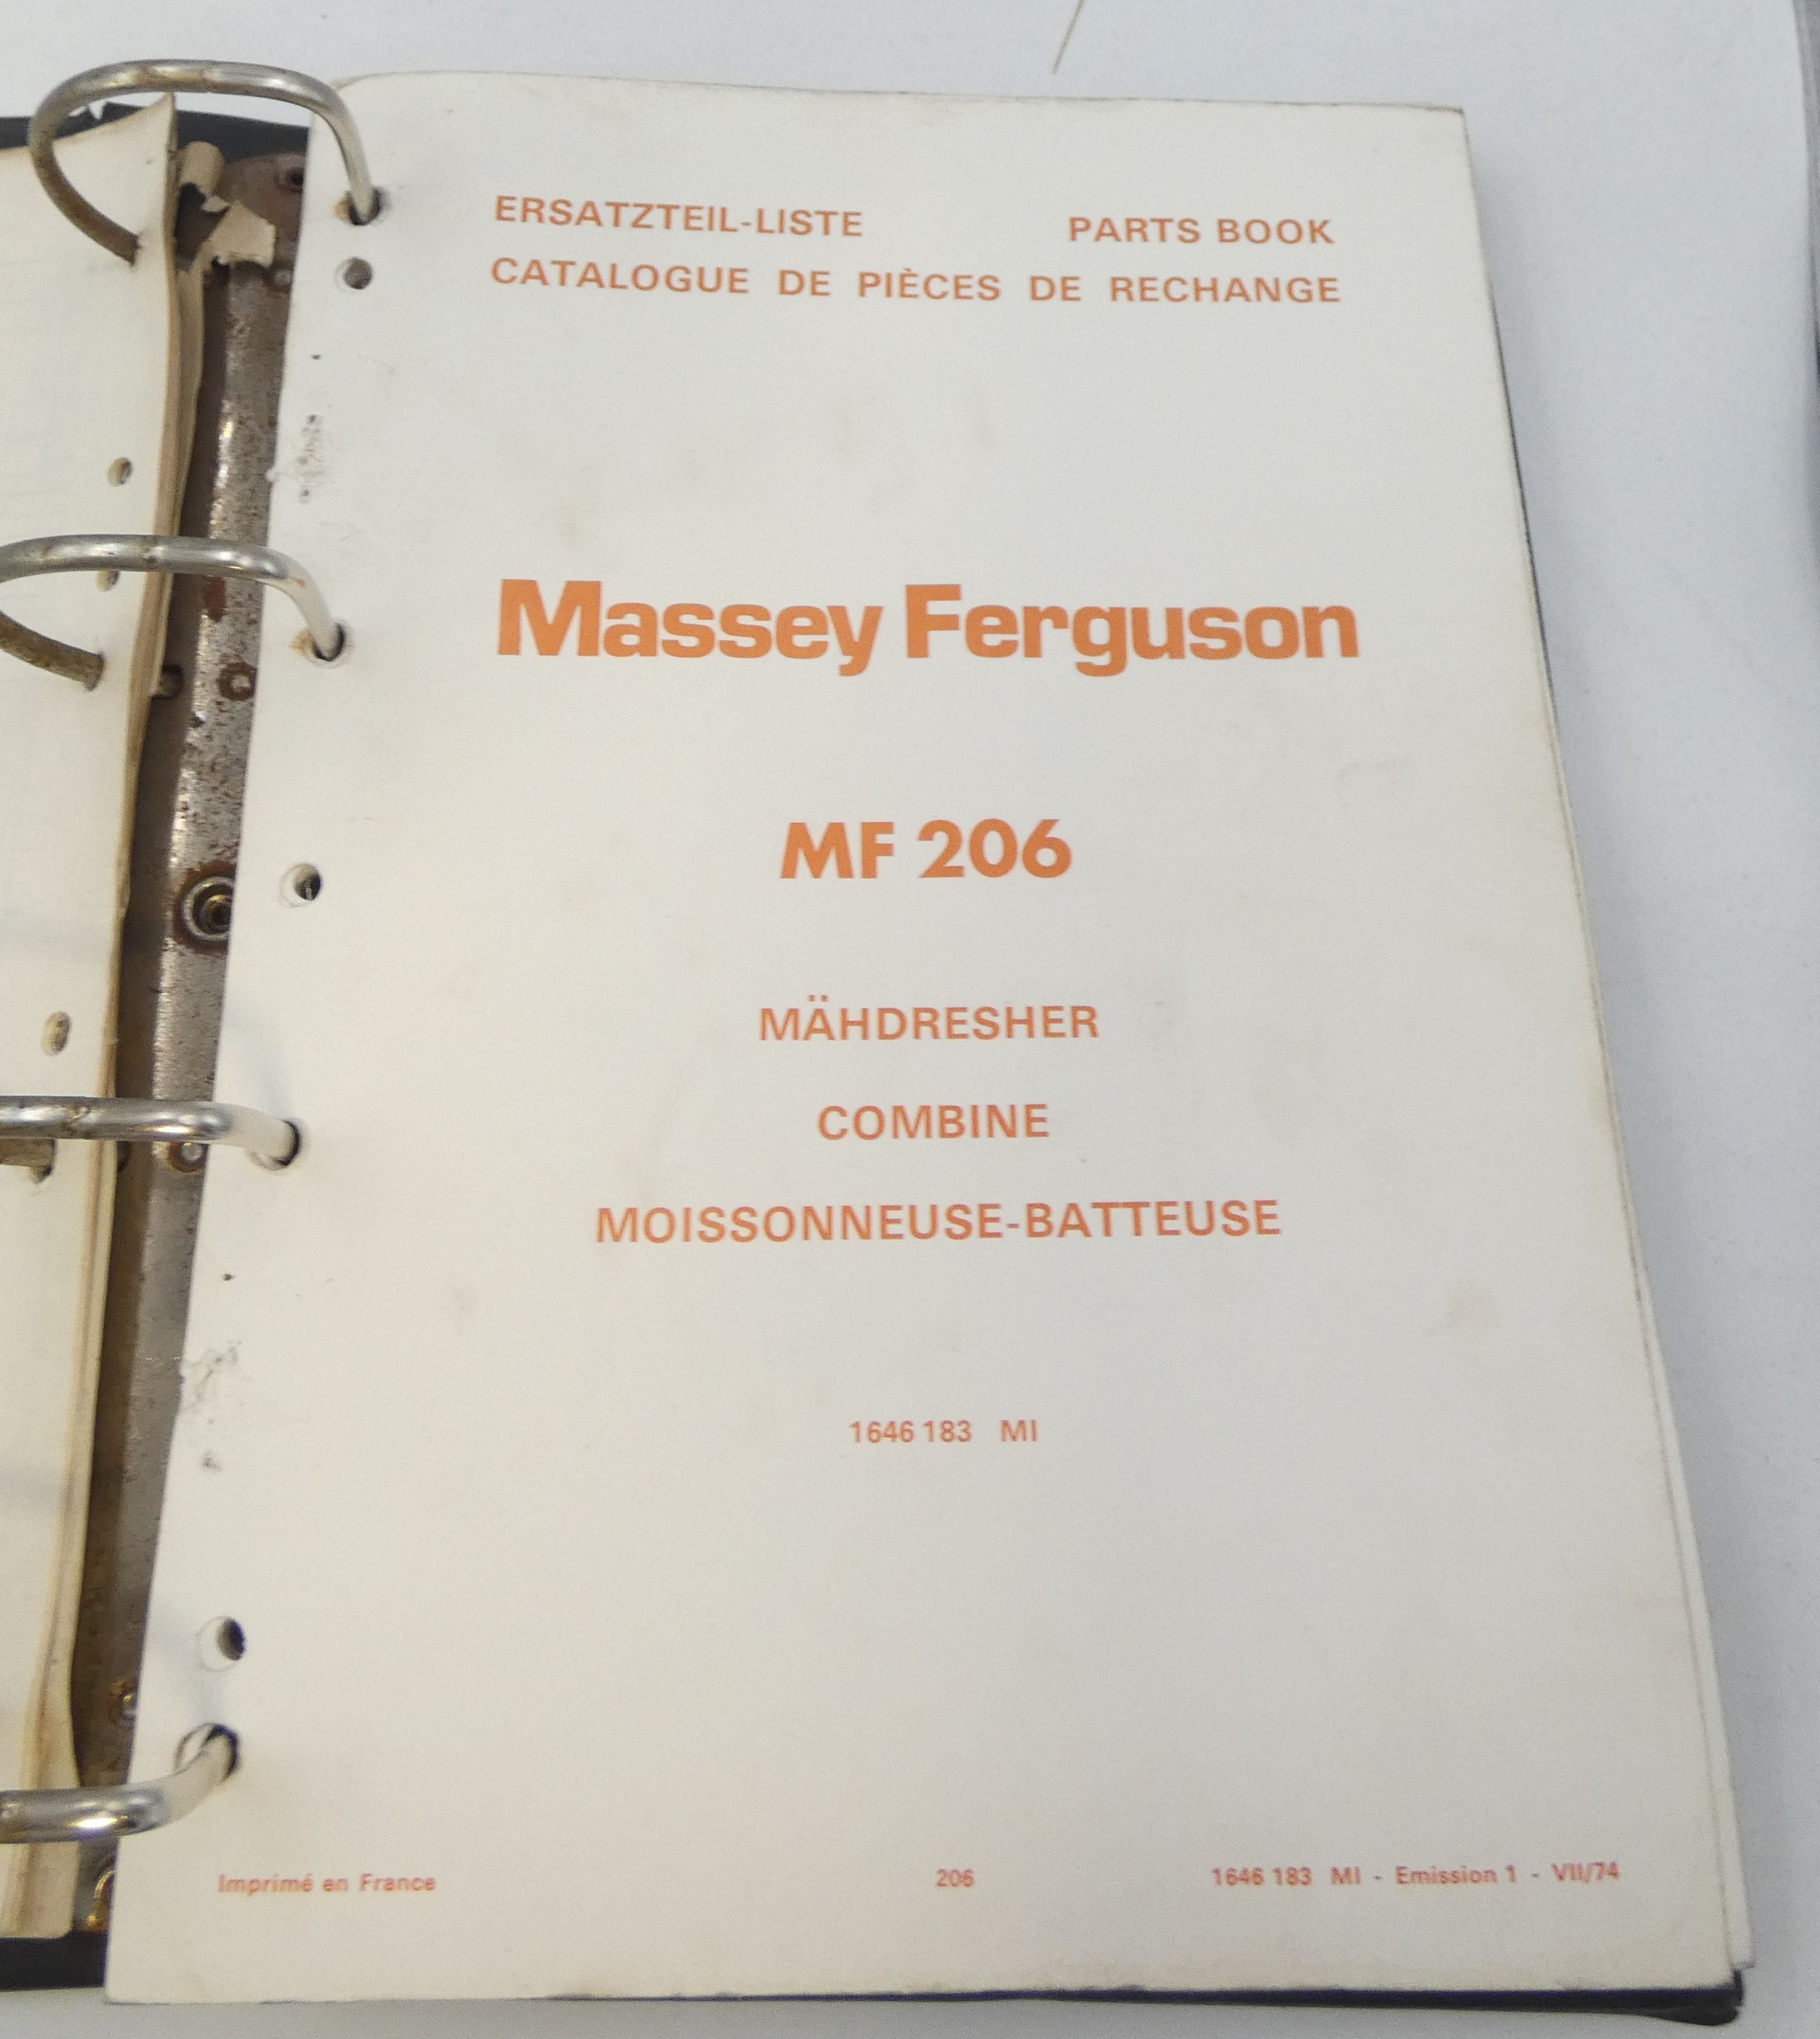 Massey Ferguson MF206 combine parts book